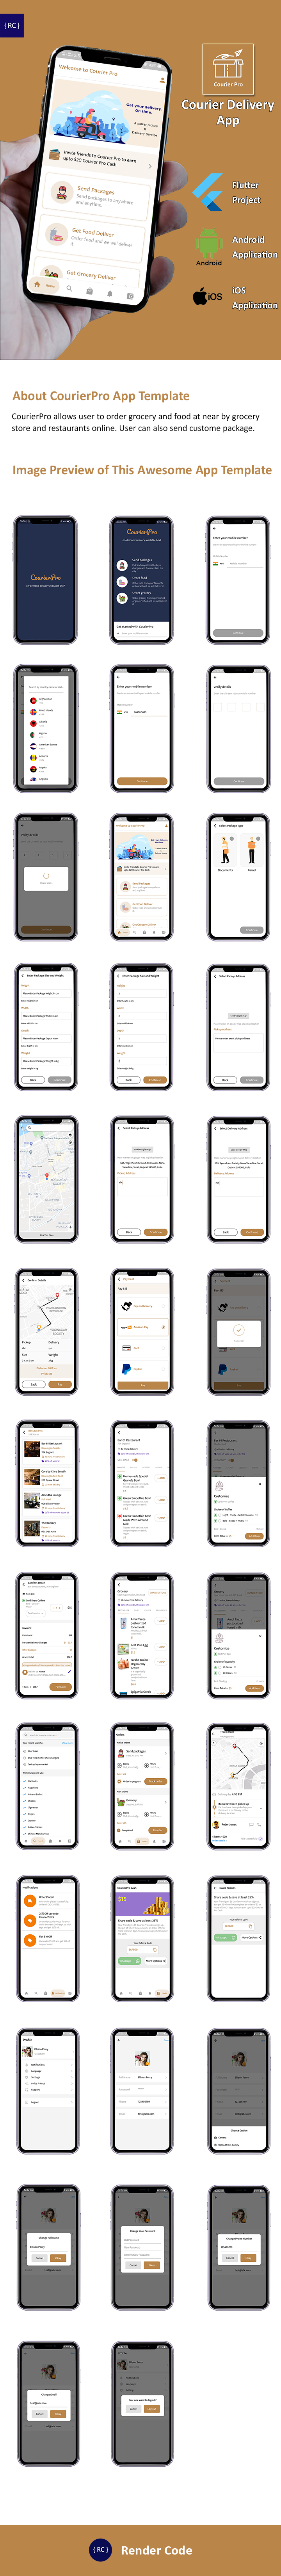 Courier Delivery Flutter Template | 2 Apps | User App & Delivery App - 6